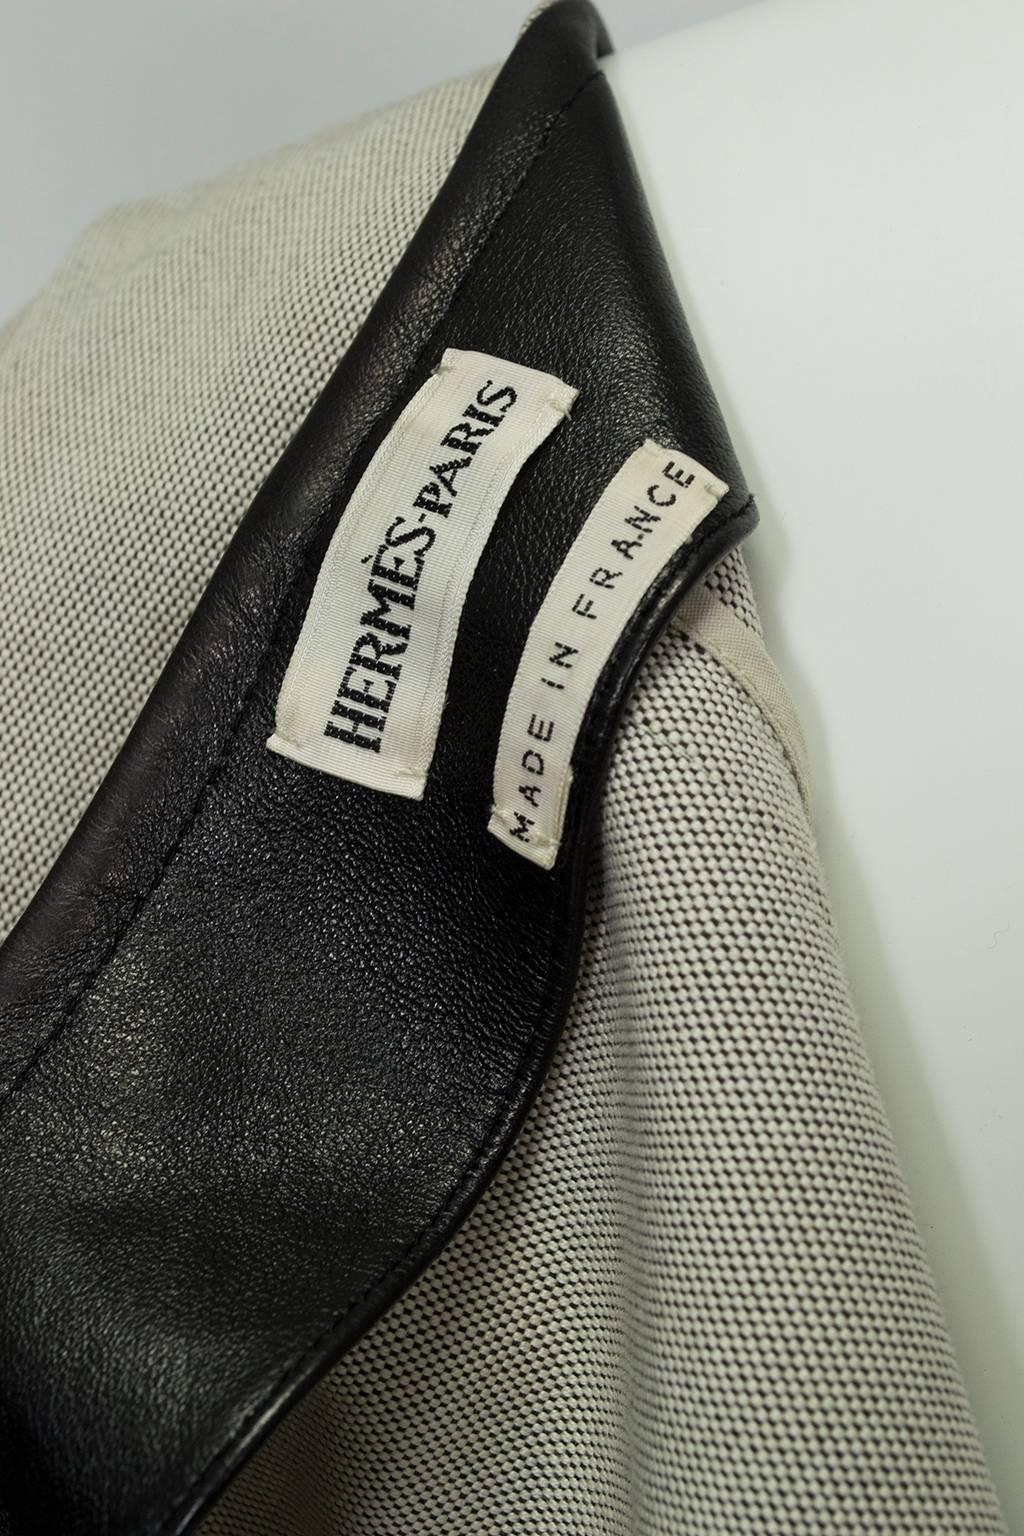 Hermès Khaki Canvas and Leather Crop Jacket w Palladium Toggles - M, 1990s For Sale 1